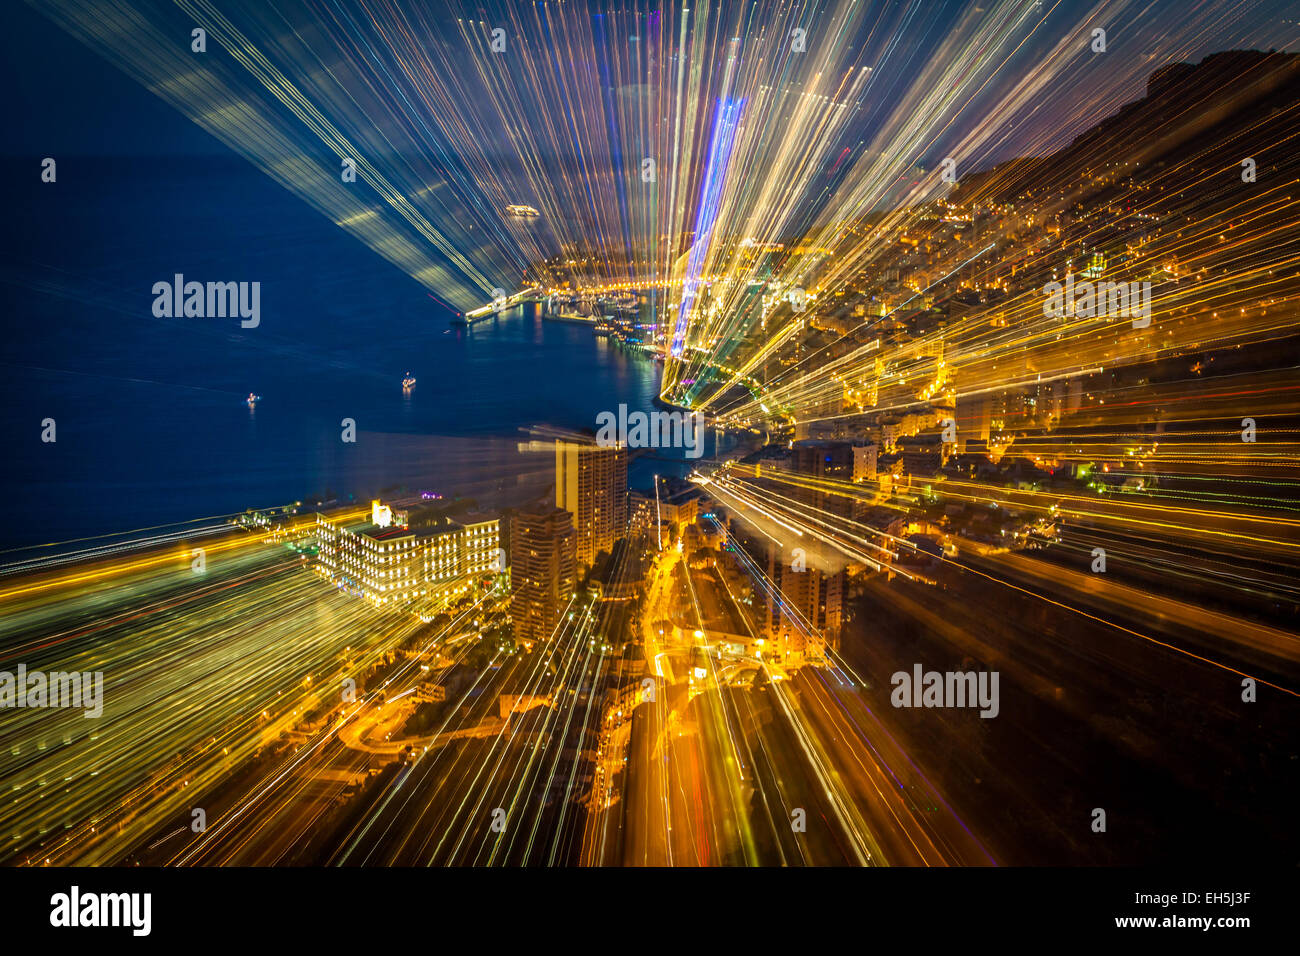 Futuristic radial blur background perspective Stock Photo